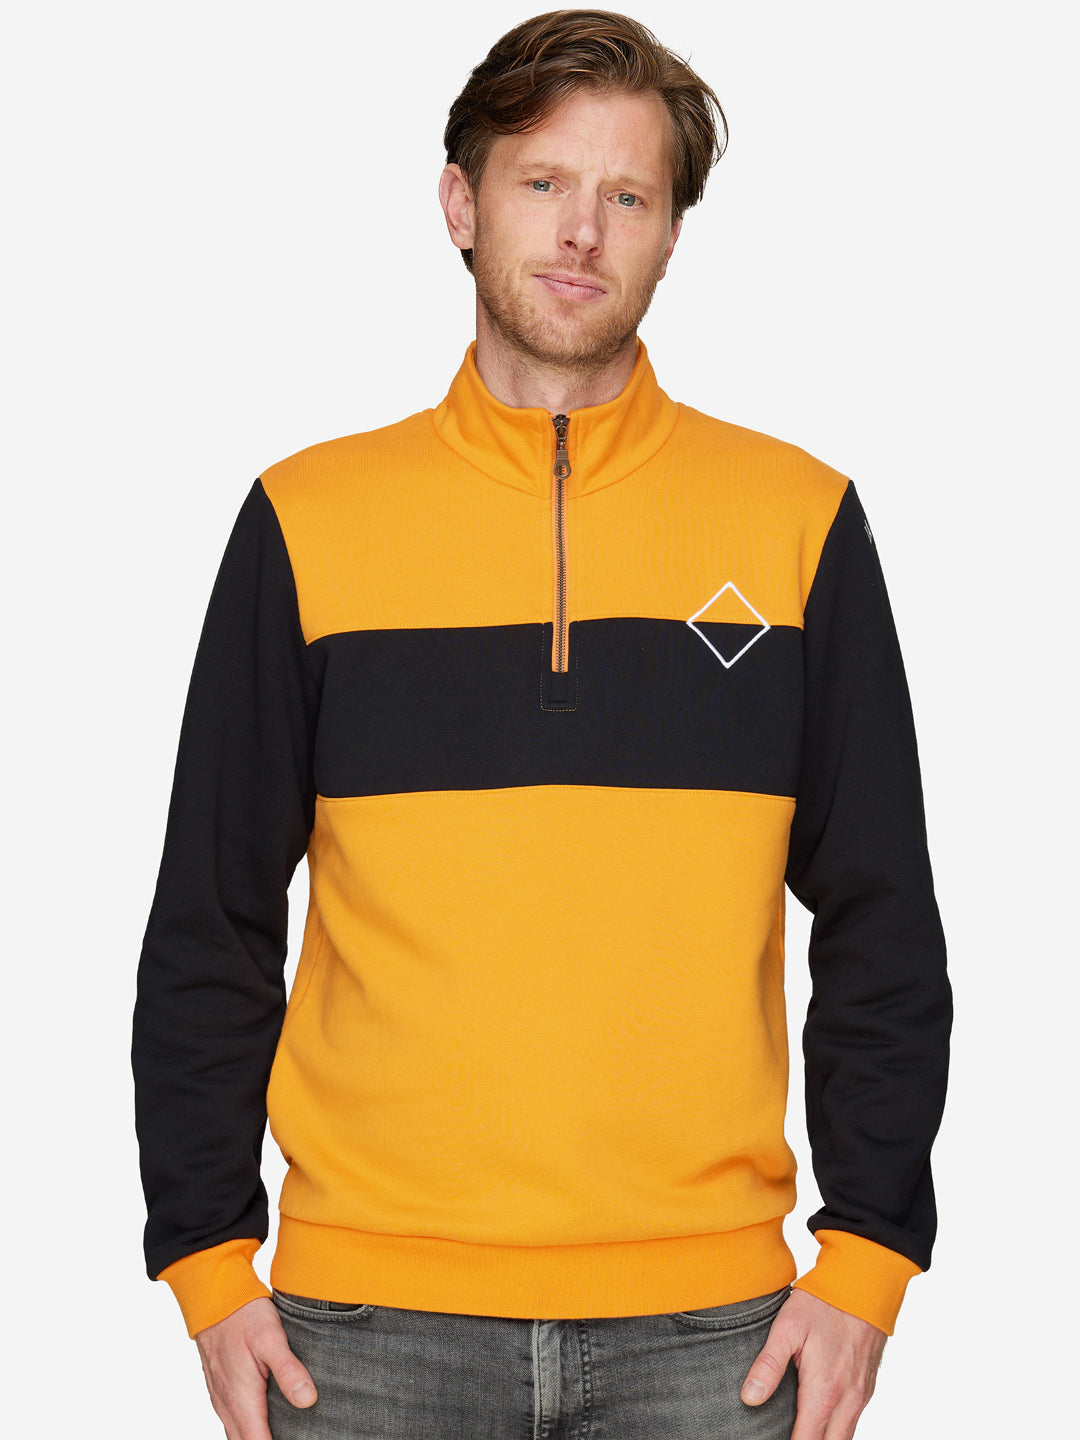 Molteni - Half Zipper - Sweatshirt